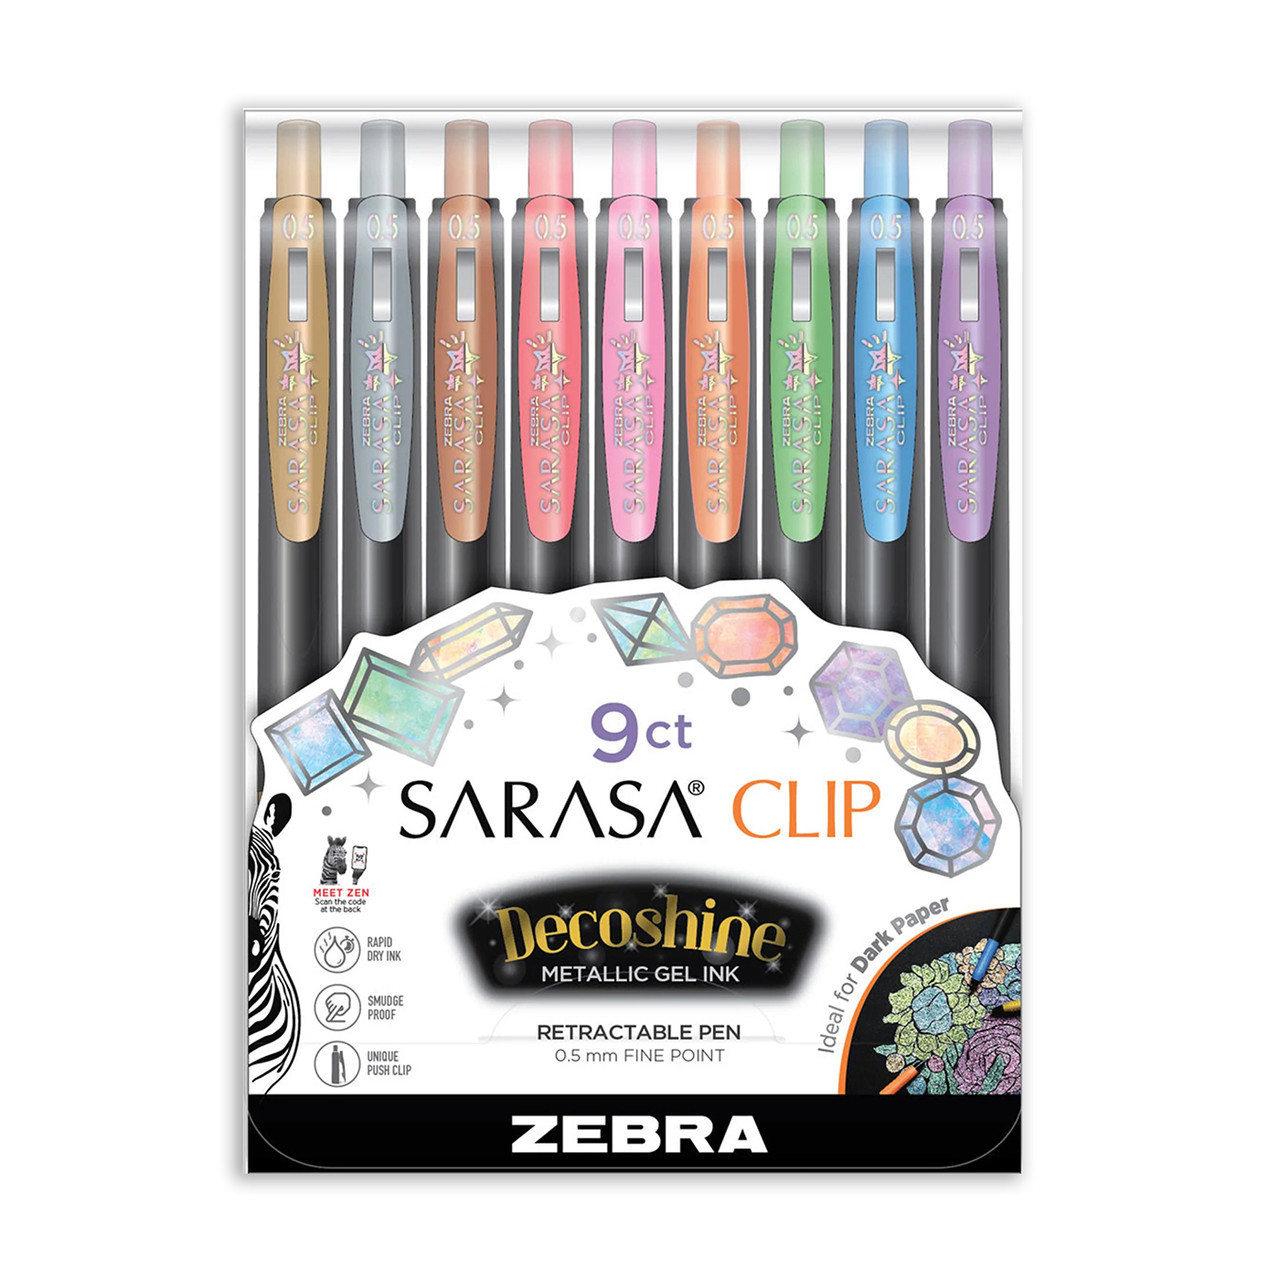 Sarasa Clip Decoshine Gel Pen Set